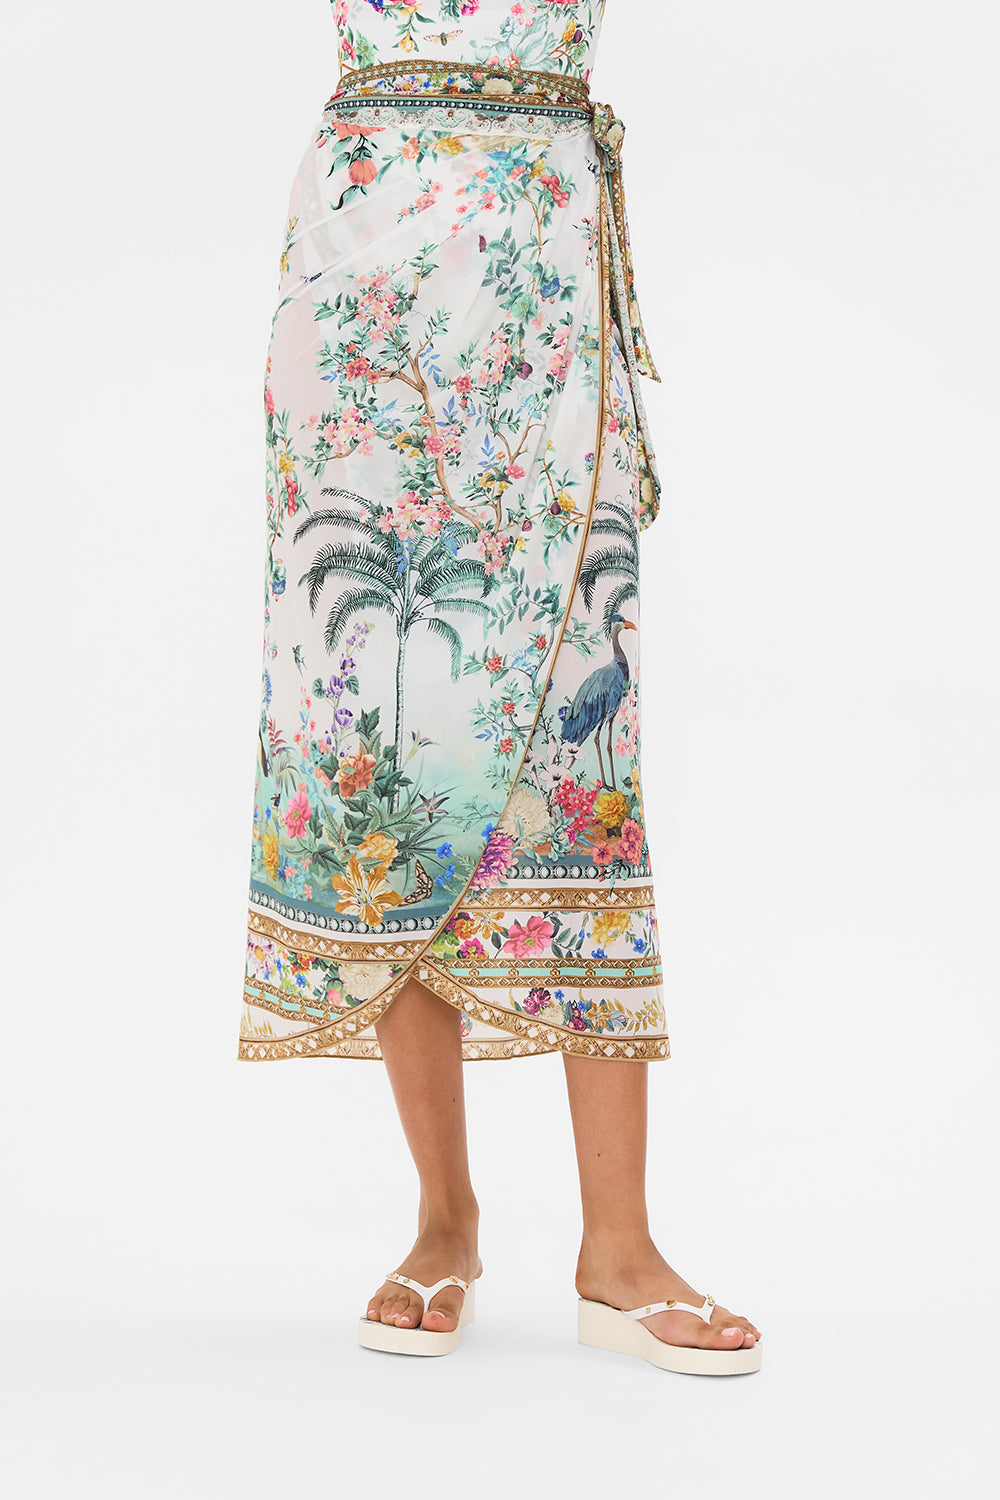 CAMILLA resortwear sarong in Plumes and Parterres print 